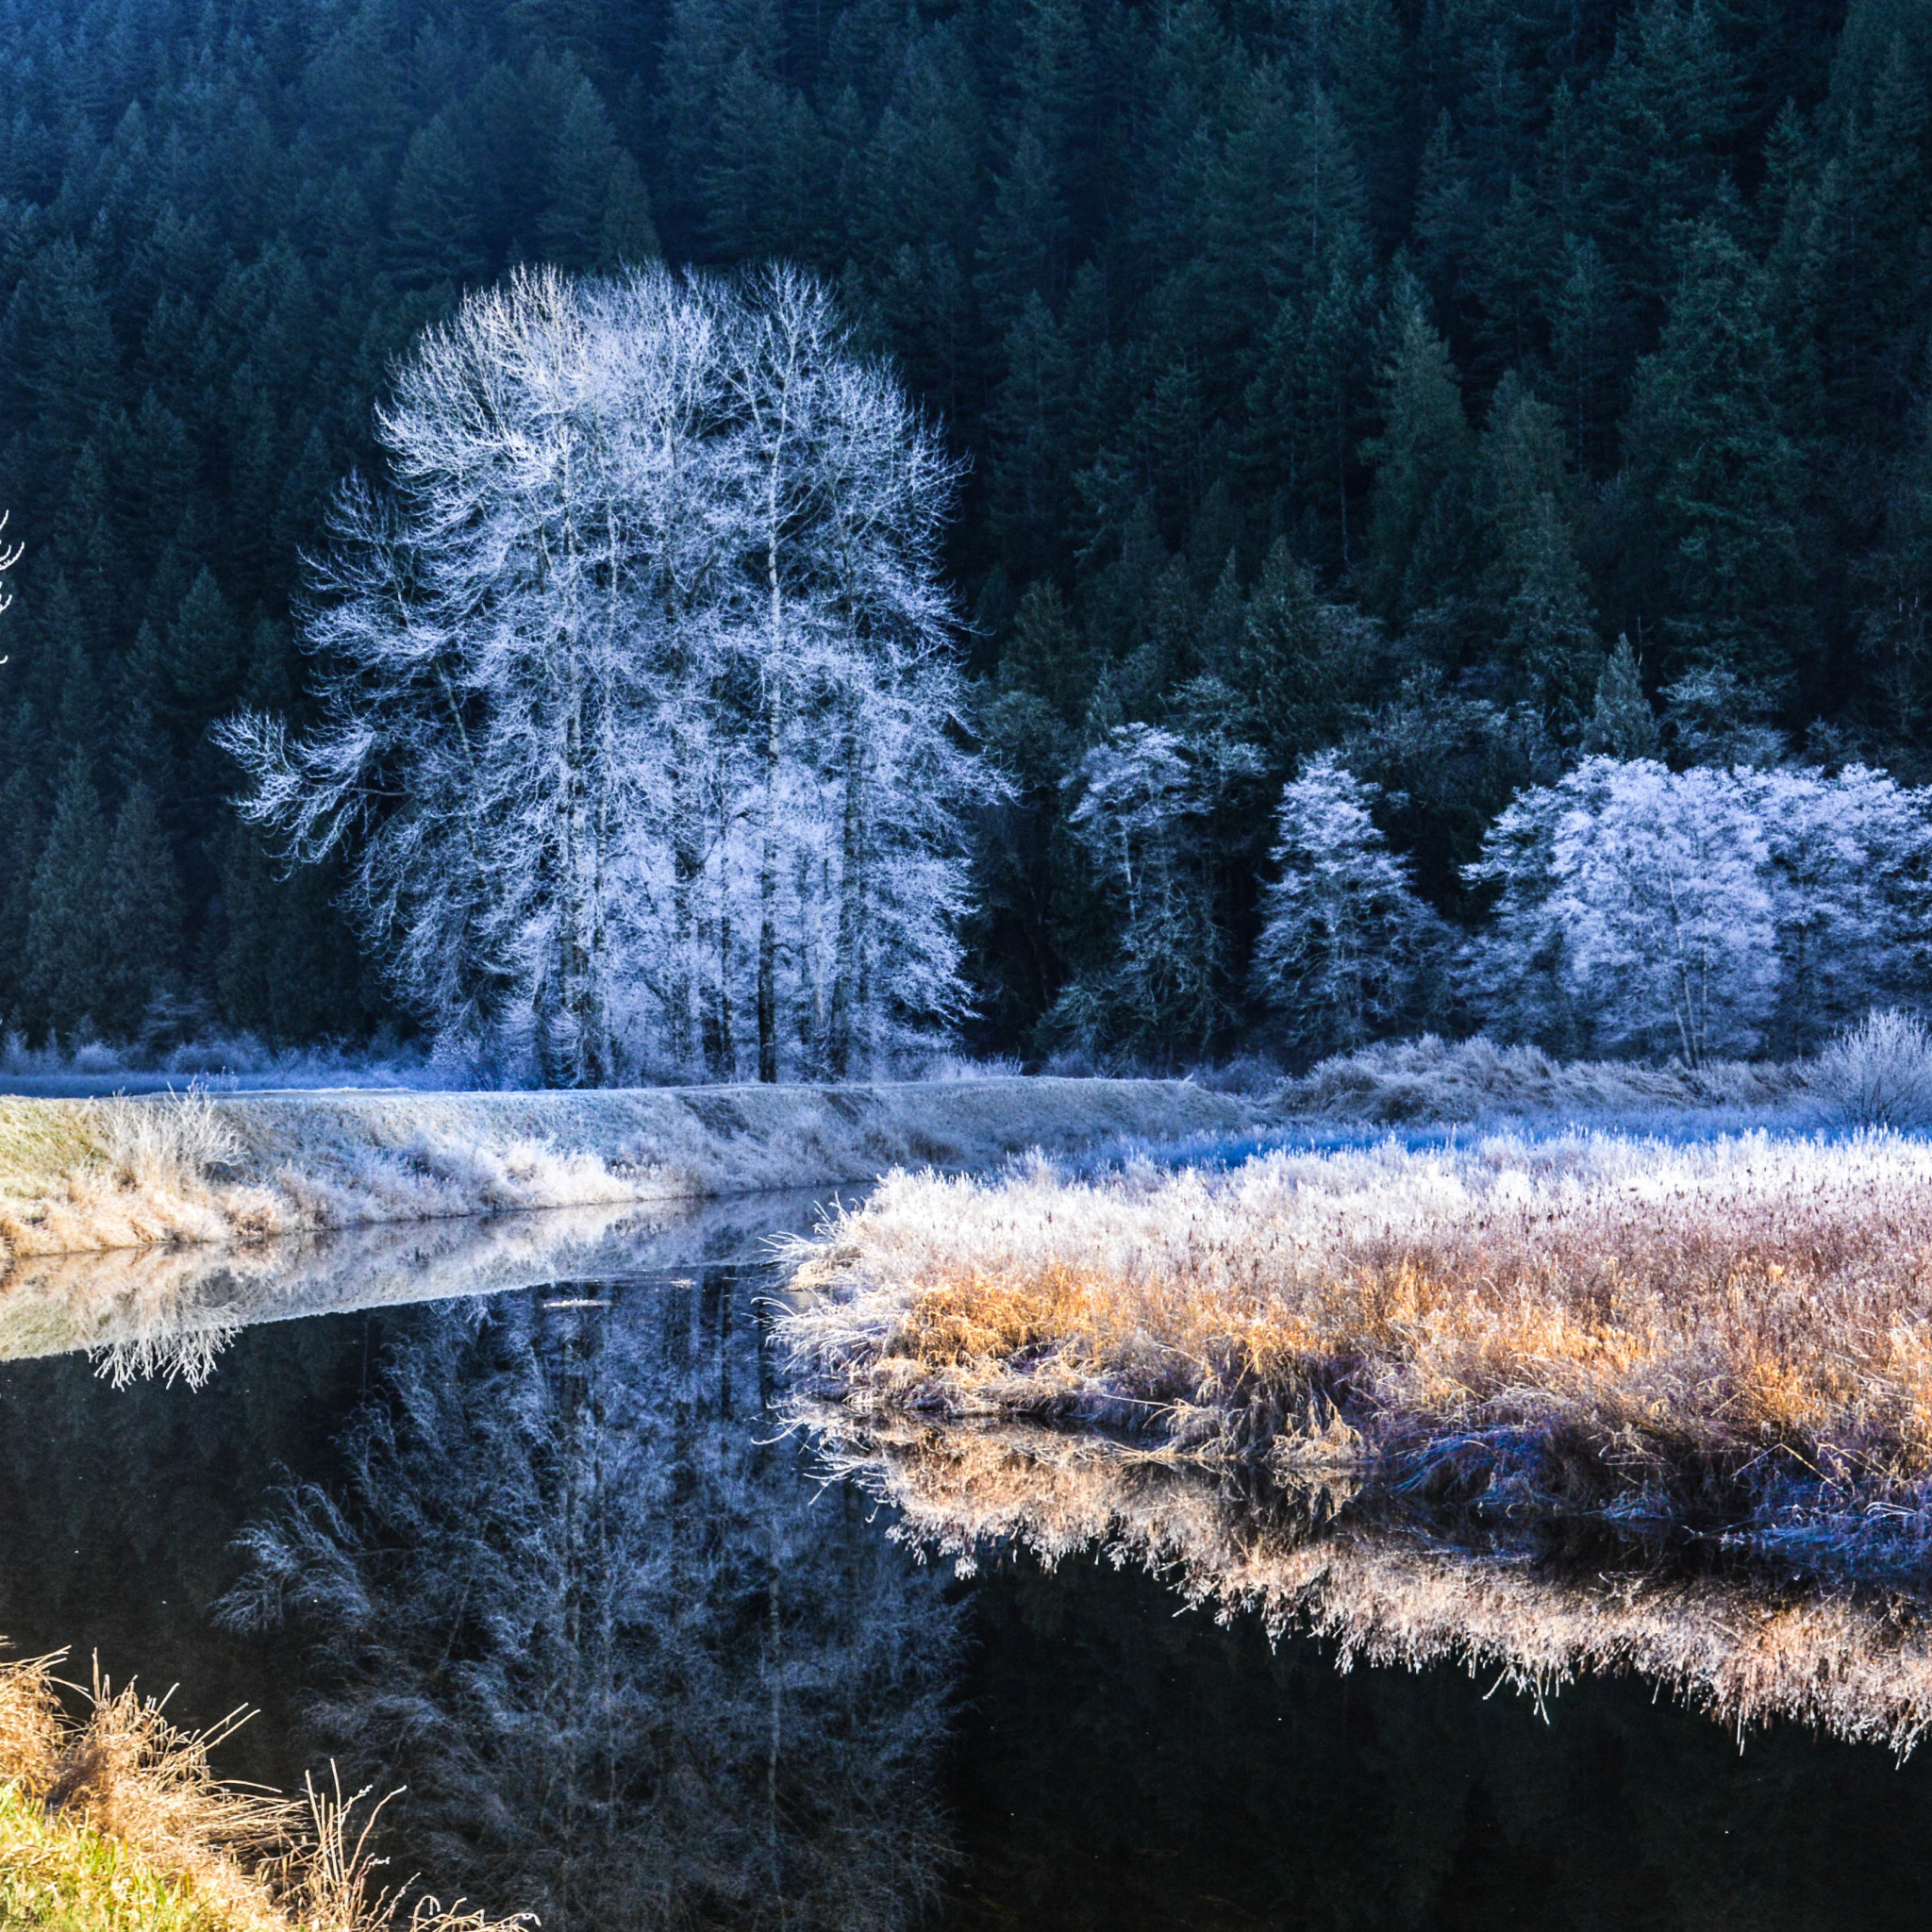 Звуки природы зимой. Зимняя природа. Зима в лесу. Зимняя река. Зимний пейзаж с рекой.